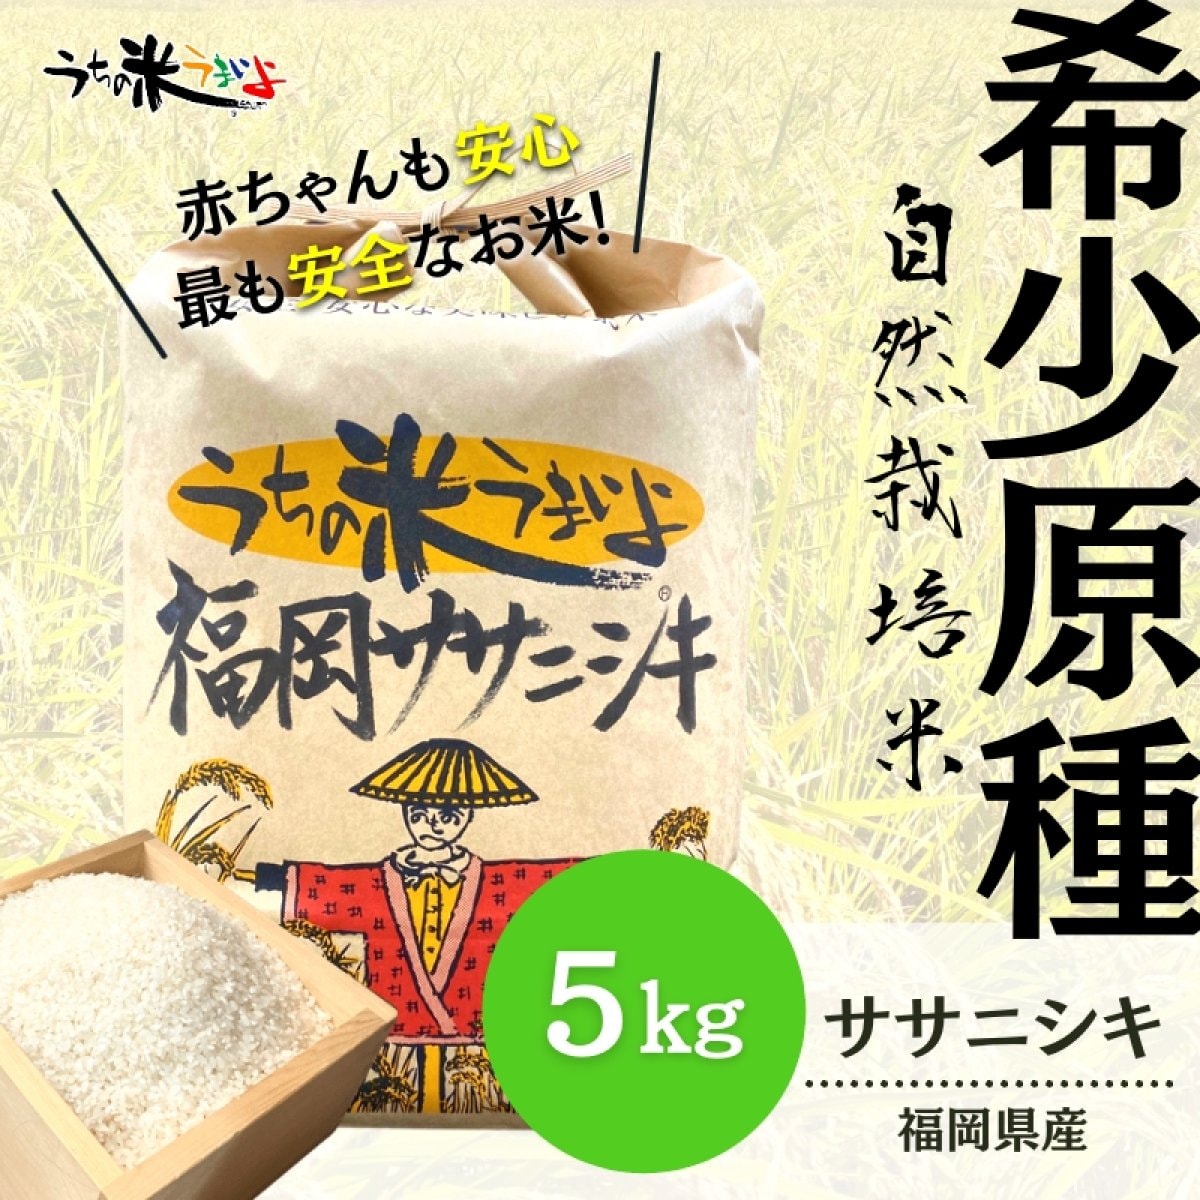 5kg【希少な固定種】福岡県産ササニシキ【自然栽培米】